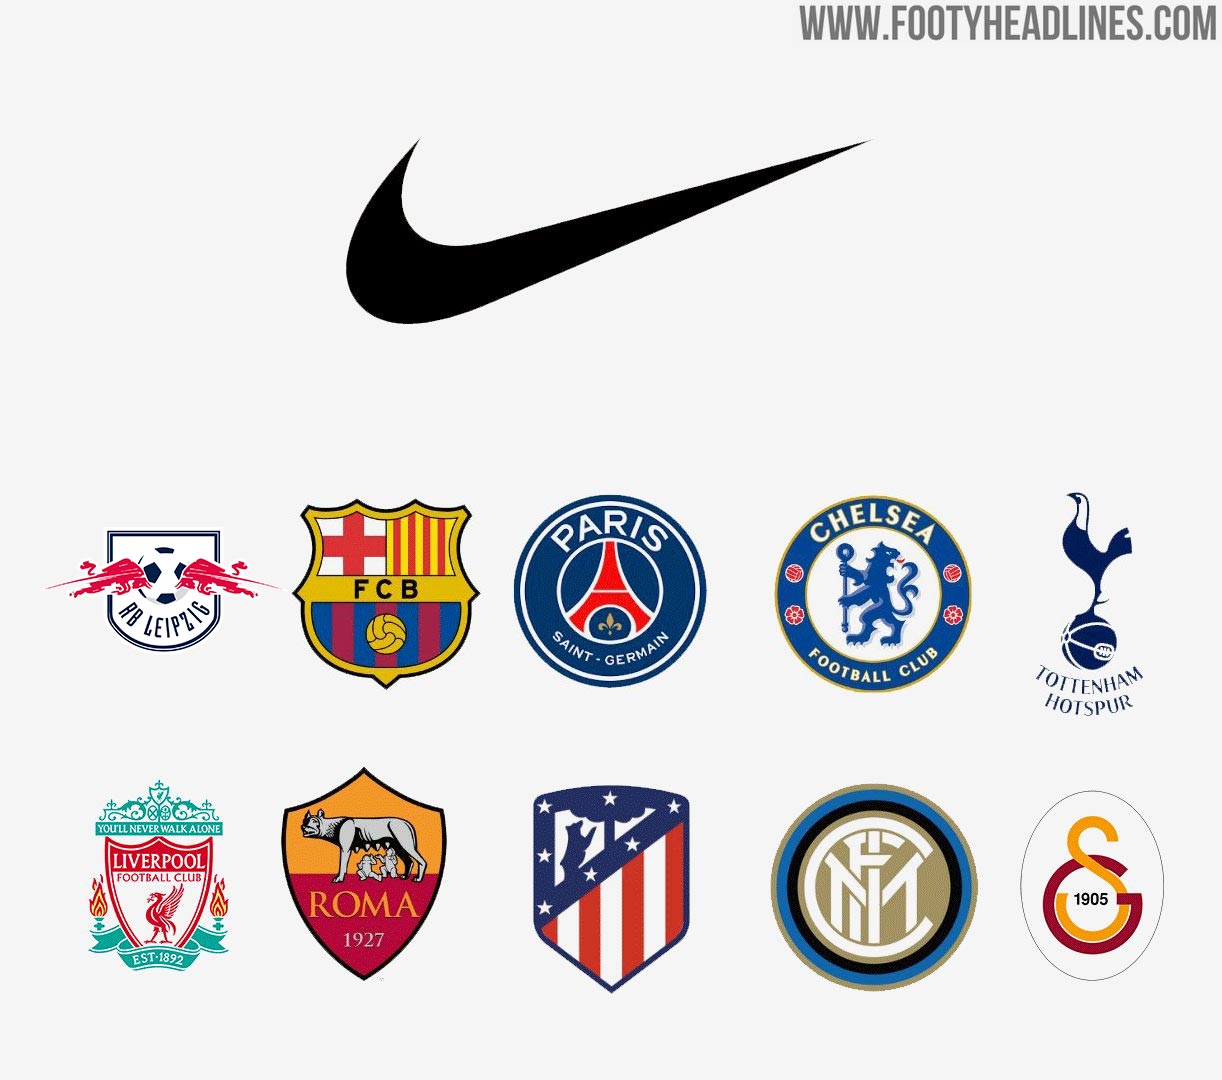 Nike's Pyramid Of Football Kit Sponsorship - Elite, Premium, Standard,  Third Party & Not Affiliated - Footy Headlines